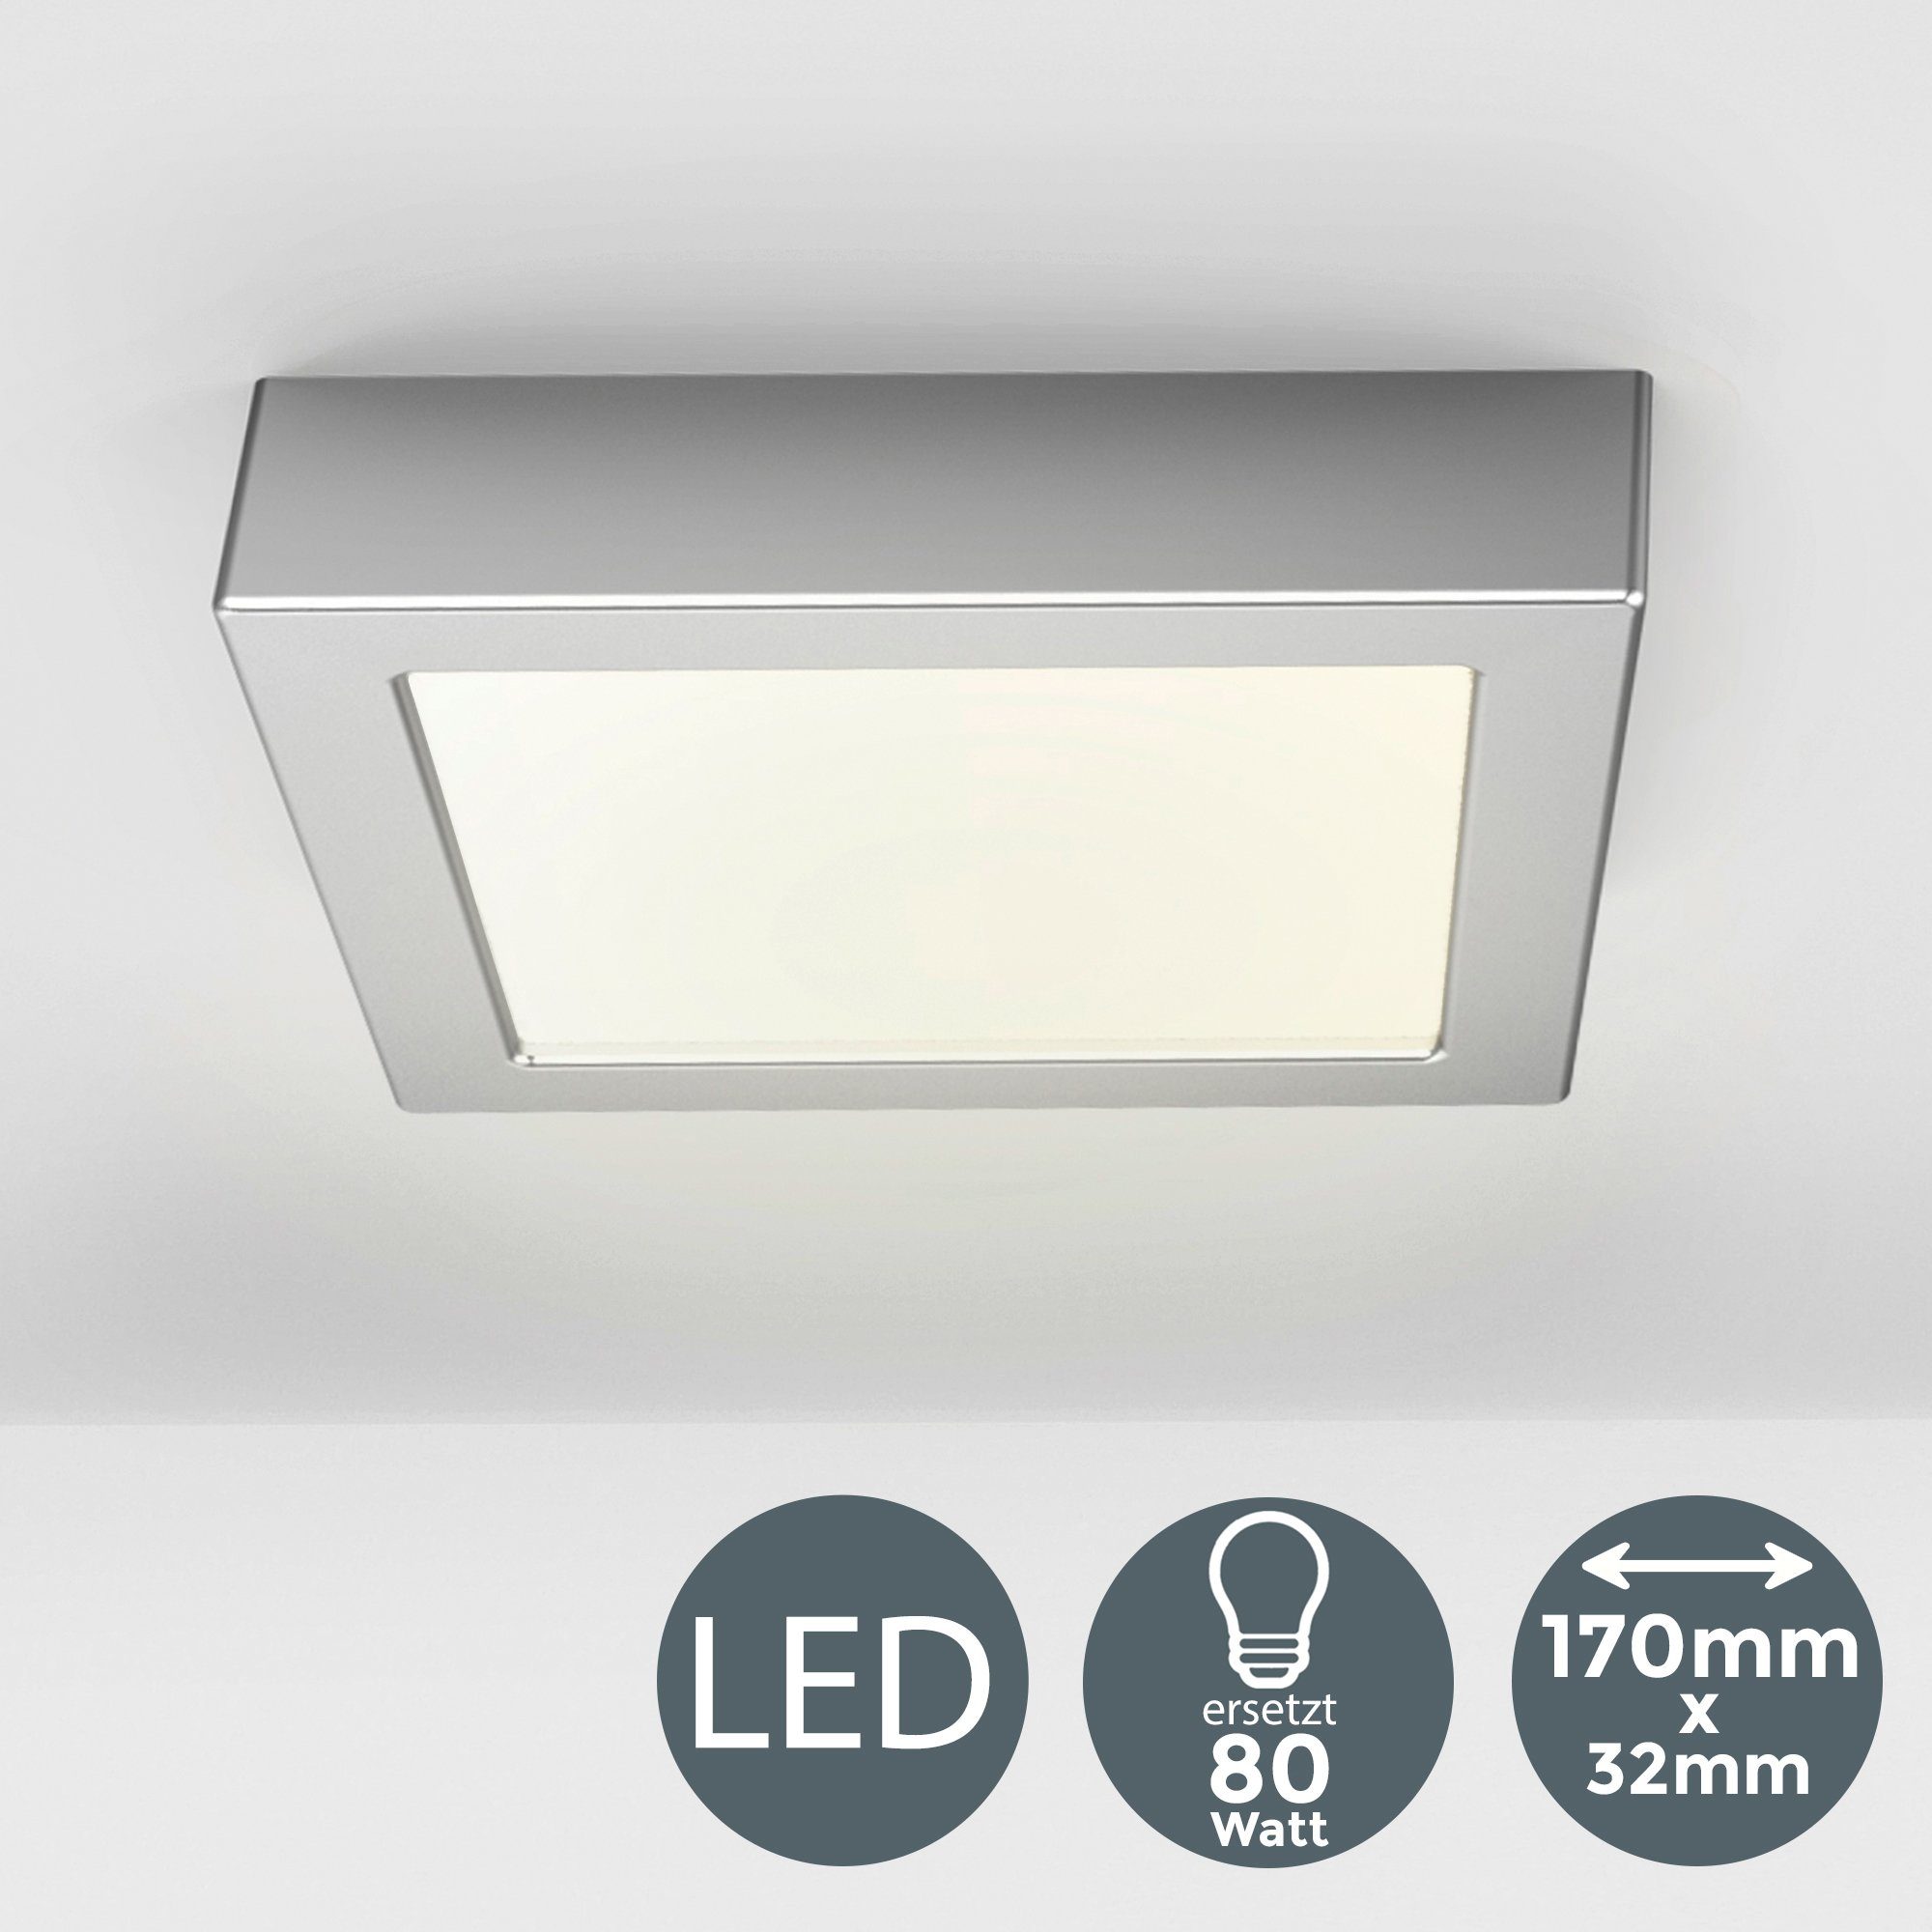 12W fest Aufbauleuchte Warmweiß, Lampe LED integriert, LED Garnet, B.K.Licht Unterbauleuchte LED Aufputzspot Aufbaustrahler Panel